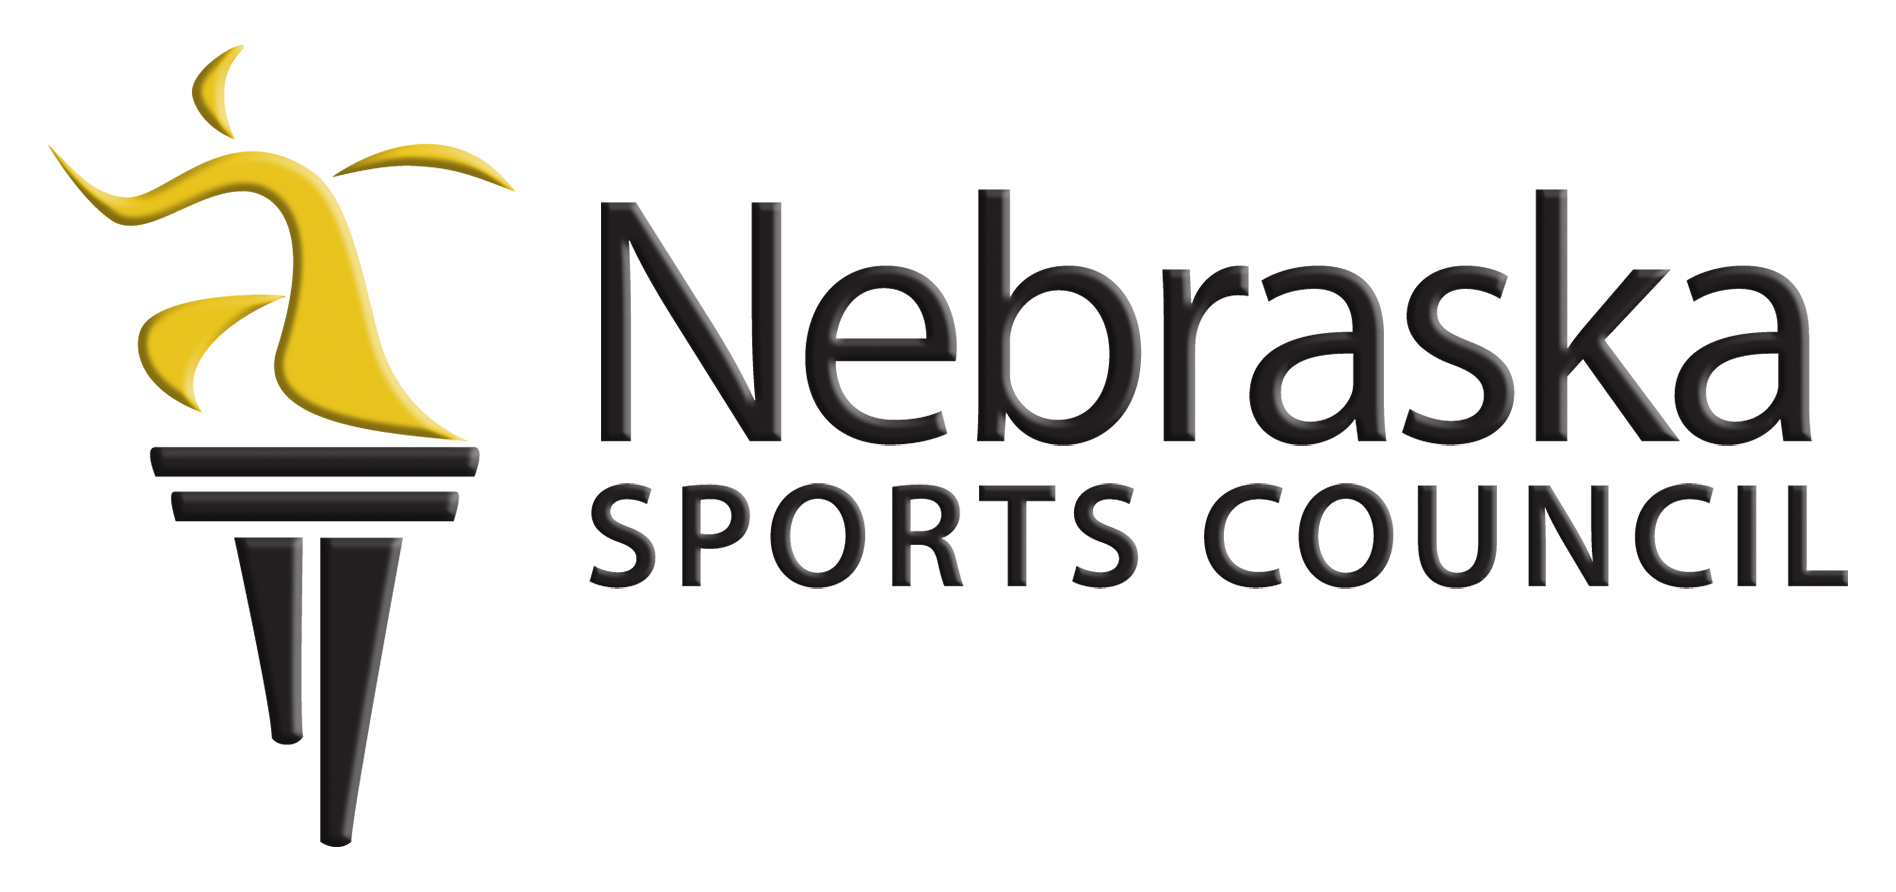 Nebraska Sports Council